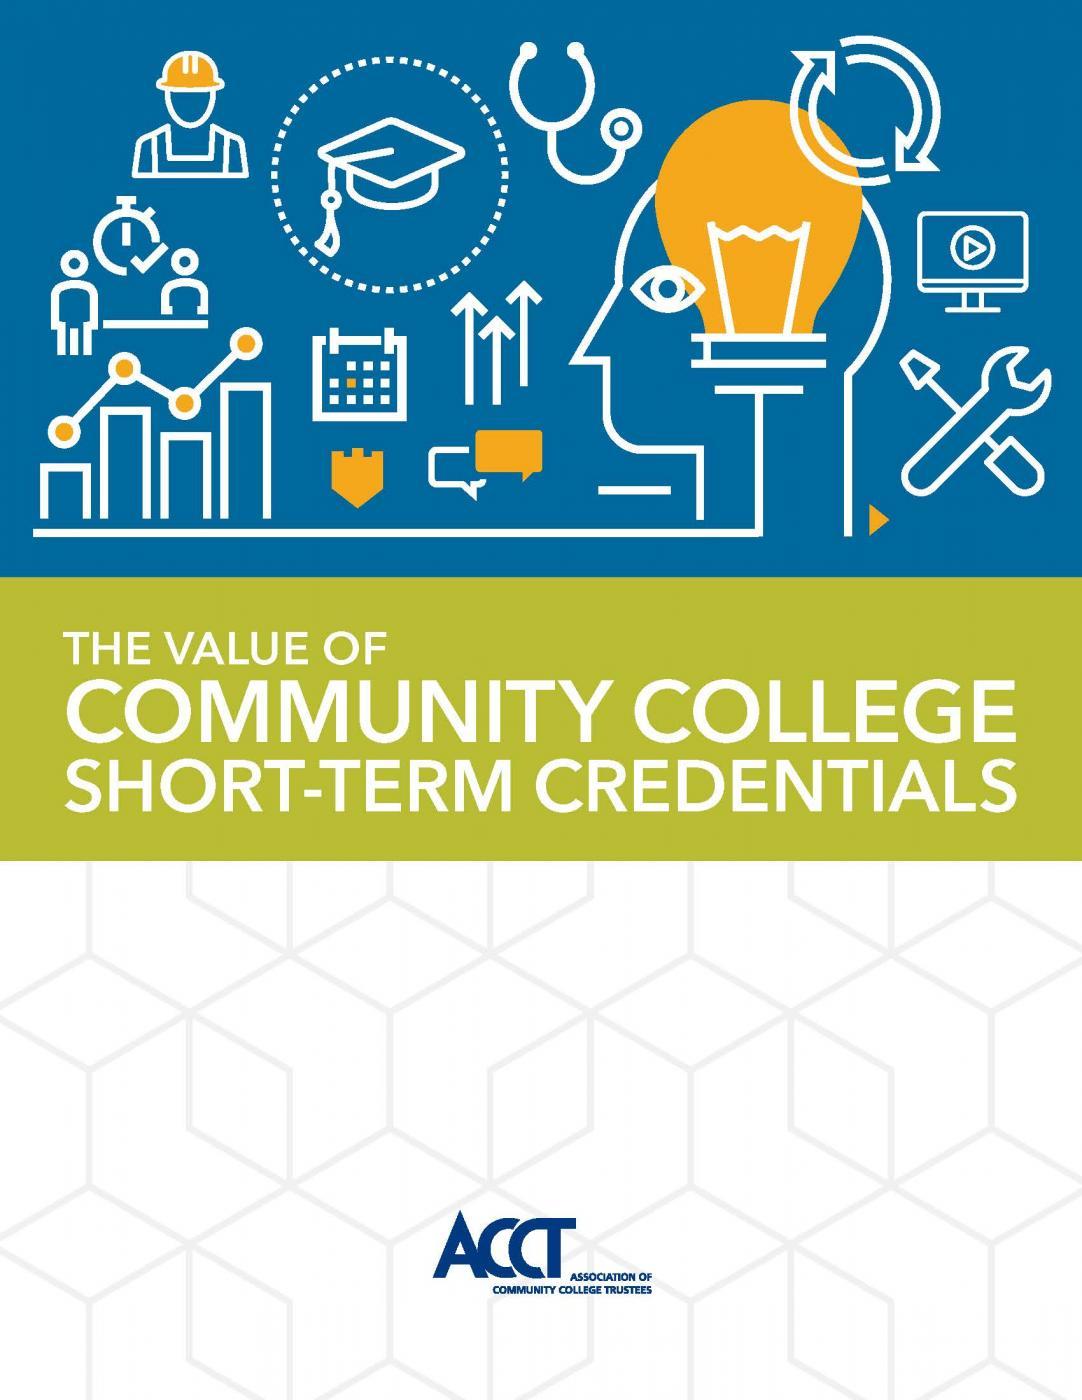 The Value of Community College Short-Term Credentials